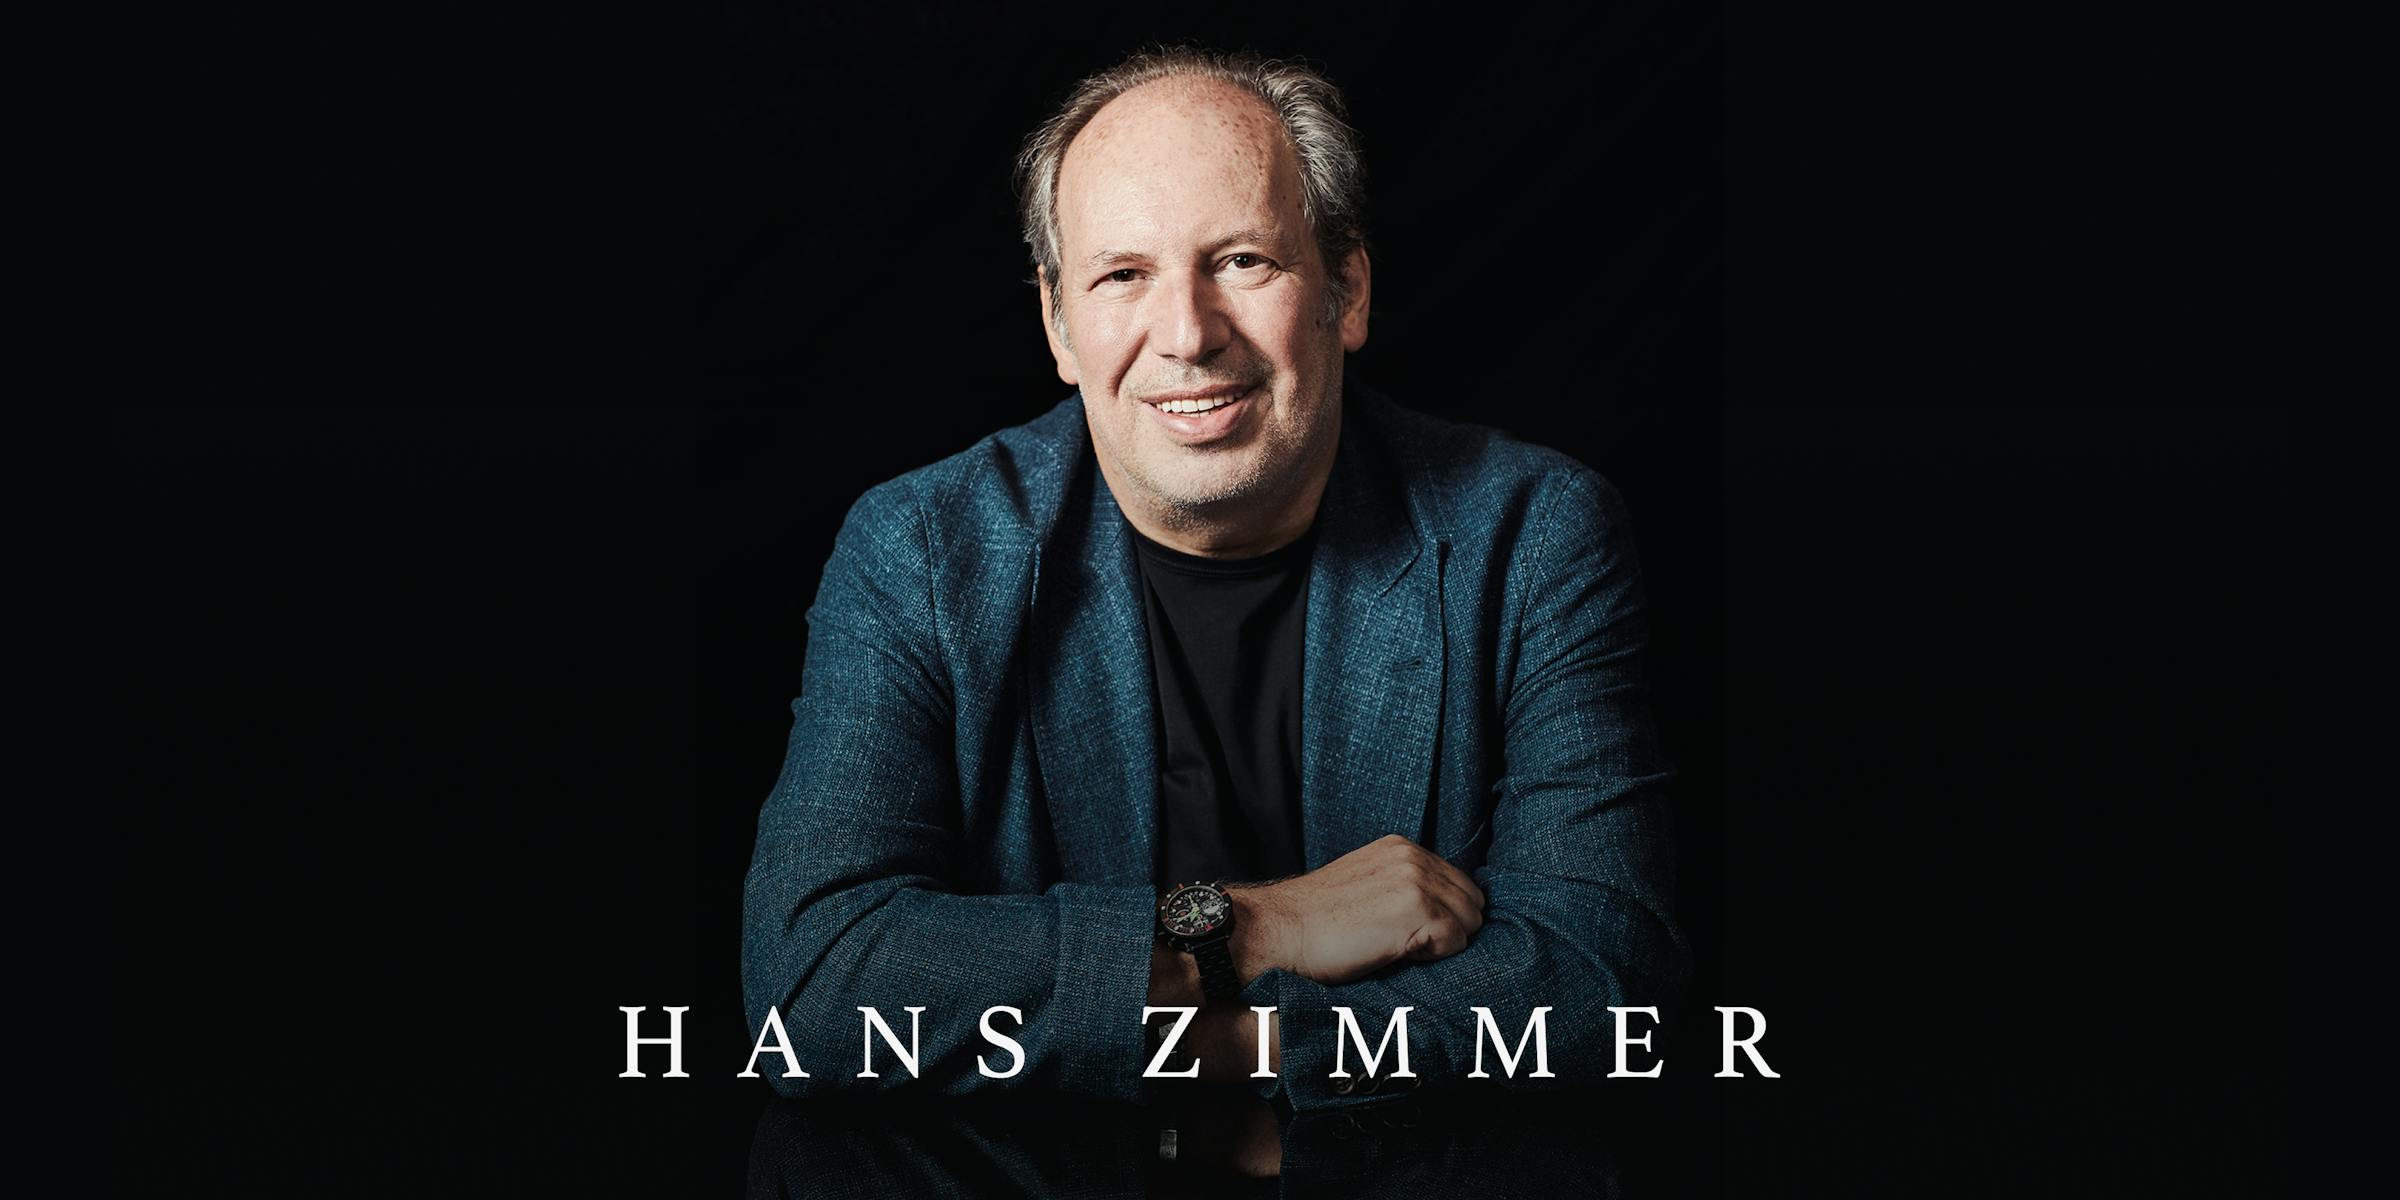 Hans Zimmer - Hans Zimmer added a new photo., hans zimmer 